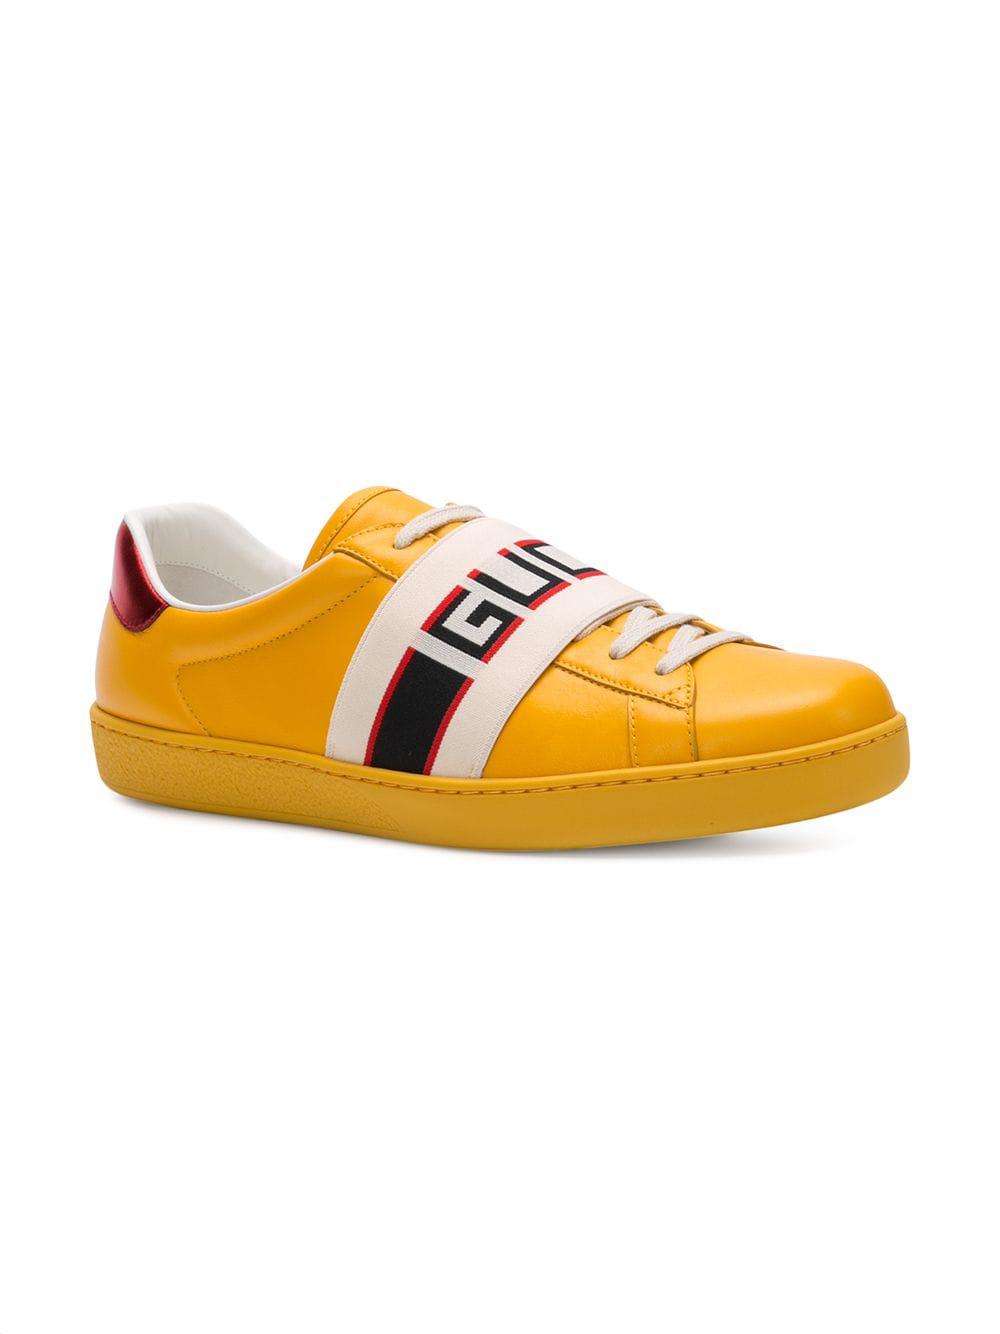 Gucci Stripe Leather Sneakers in Orange for Men - Lyst